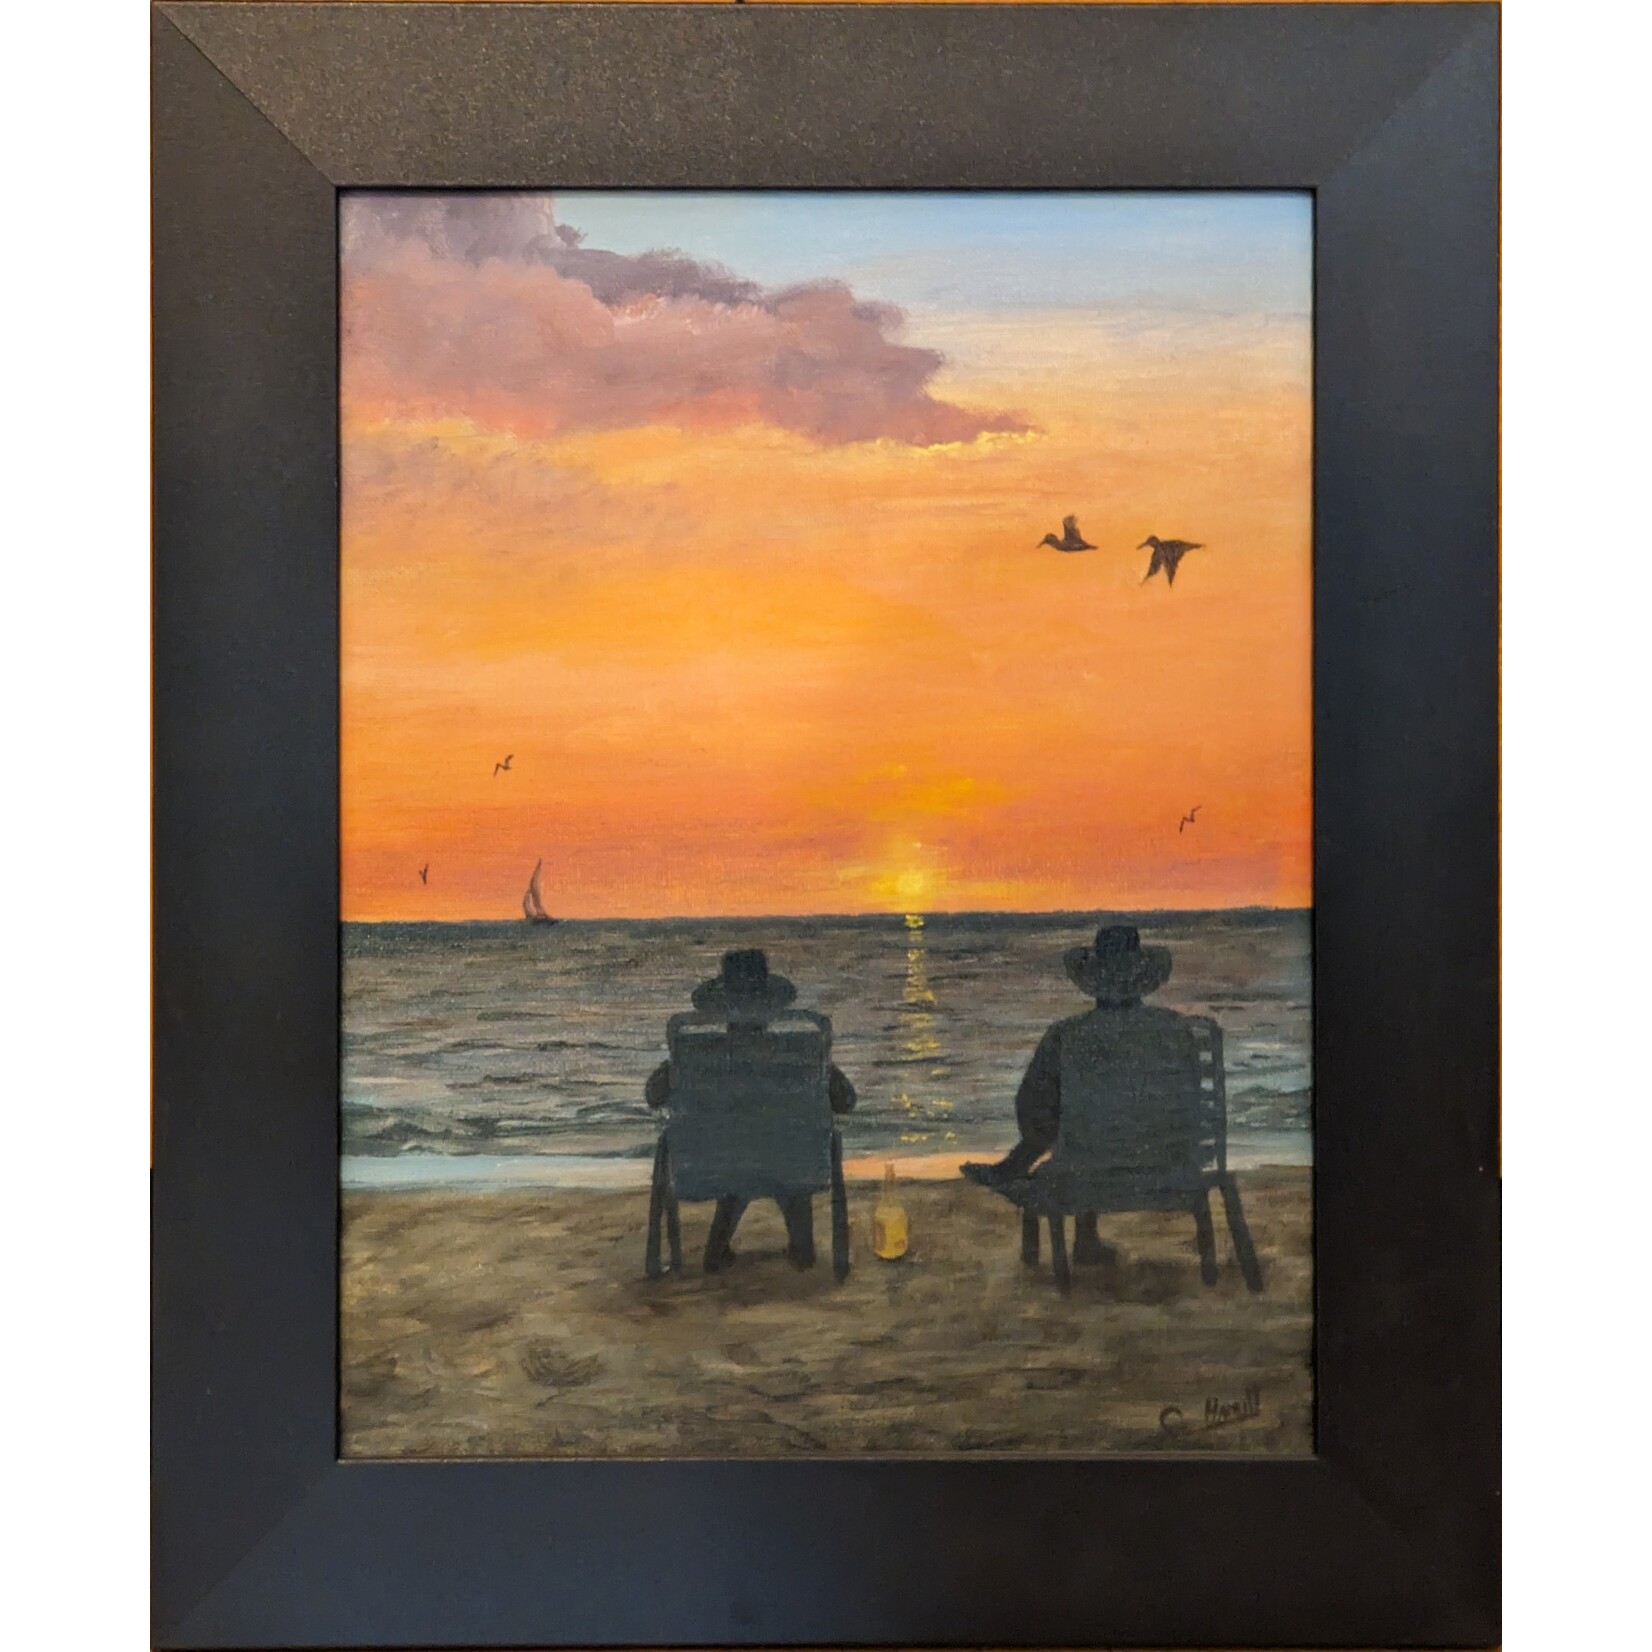 Catherine Hamill Art "Watching the Sunset"